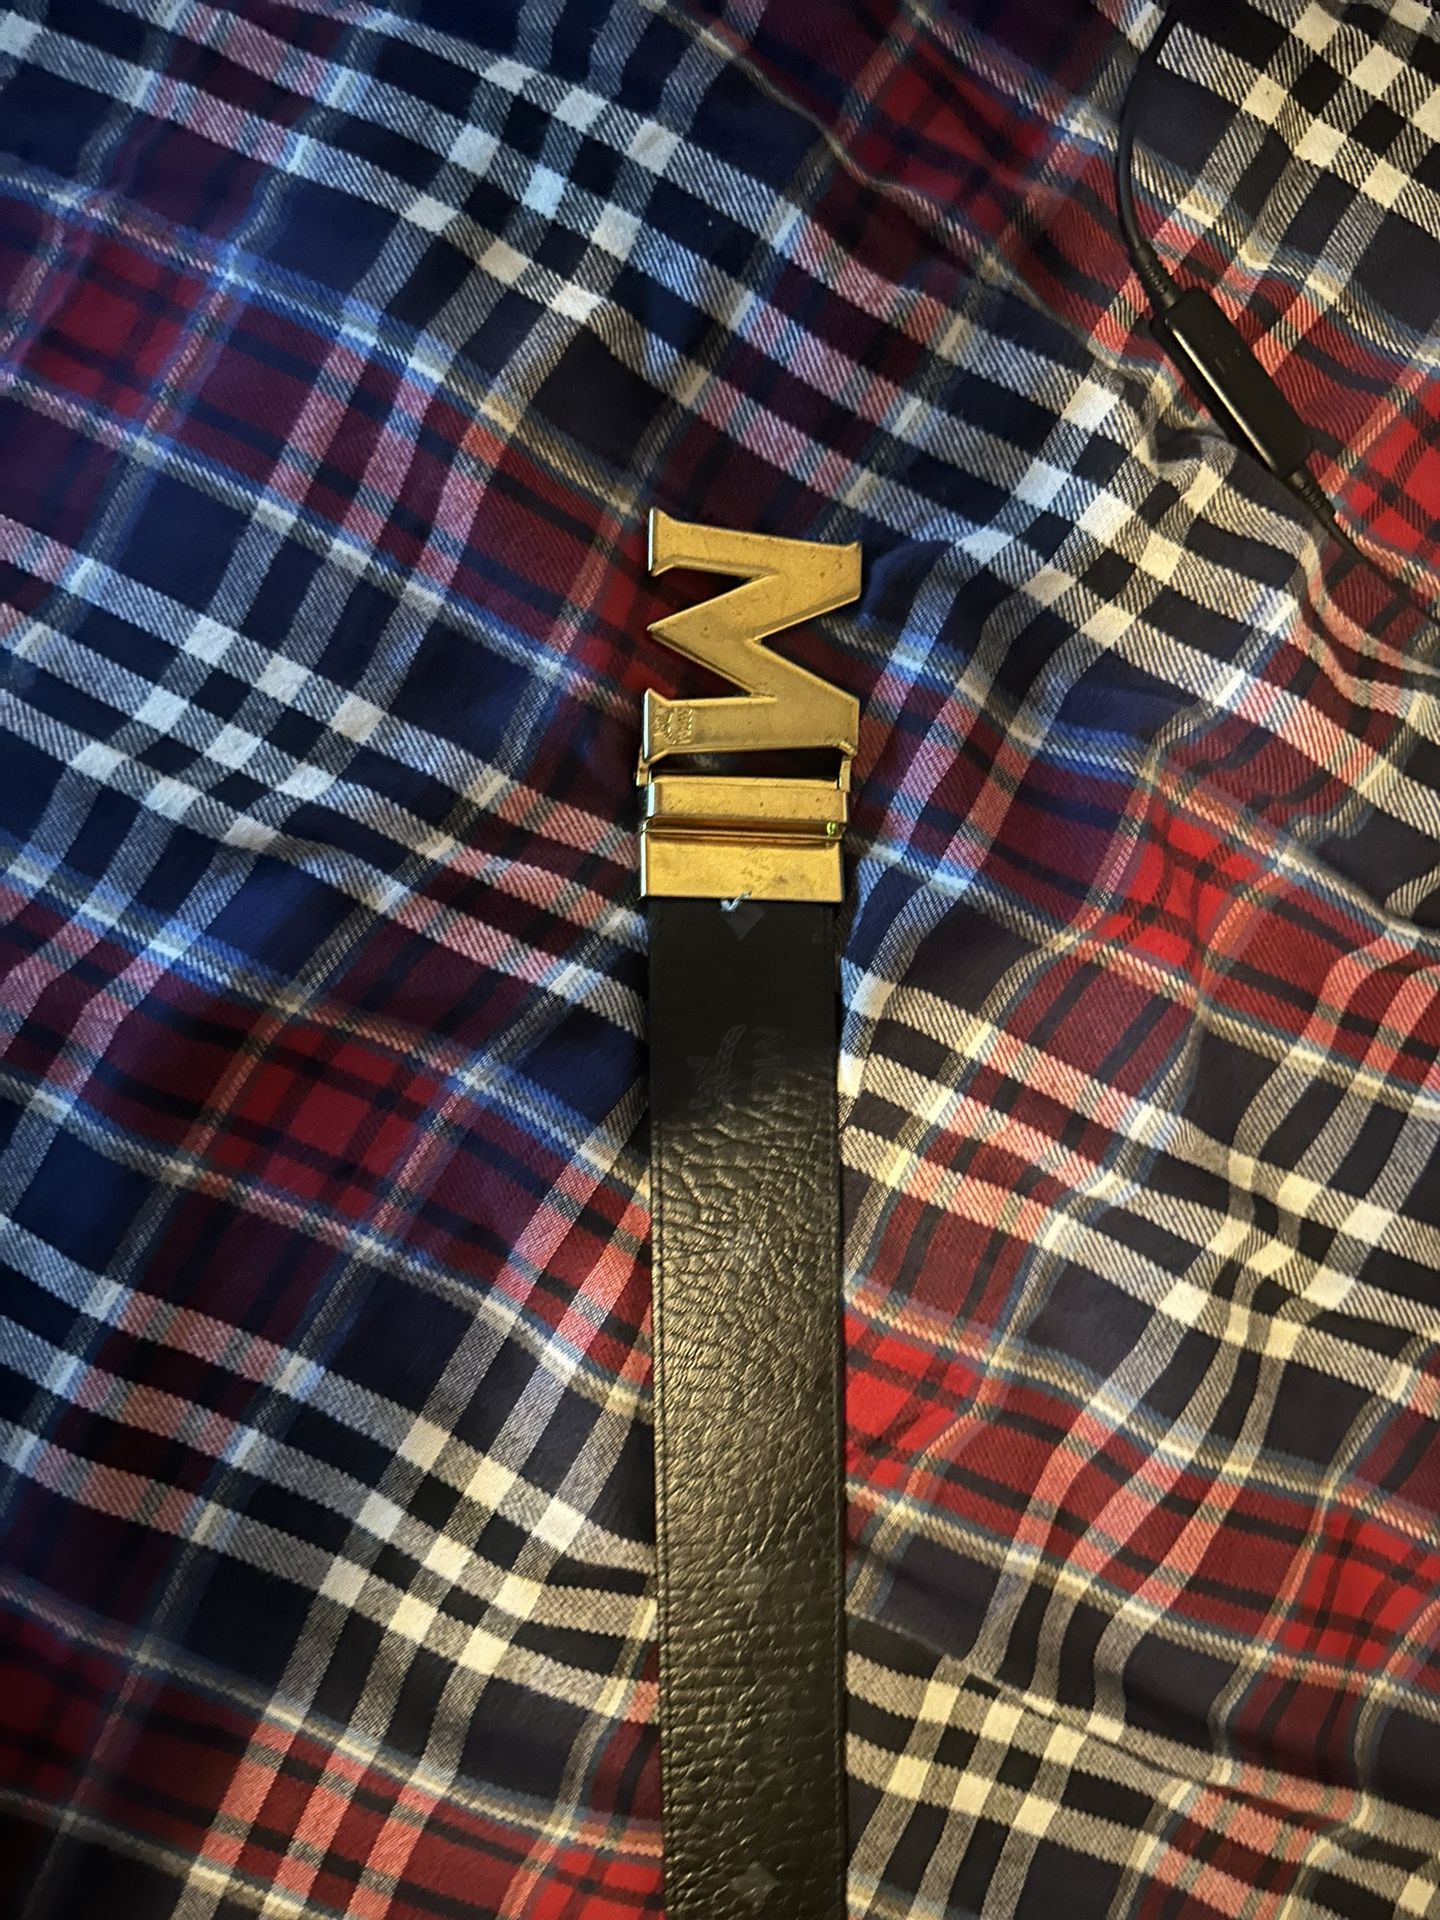 Mcm Belt 